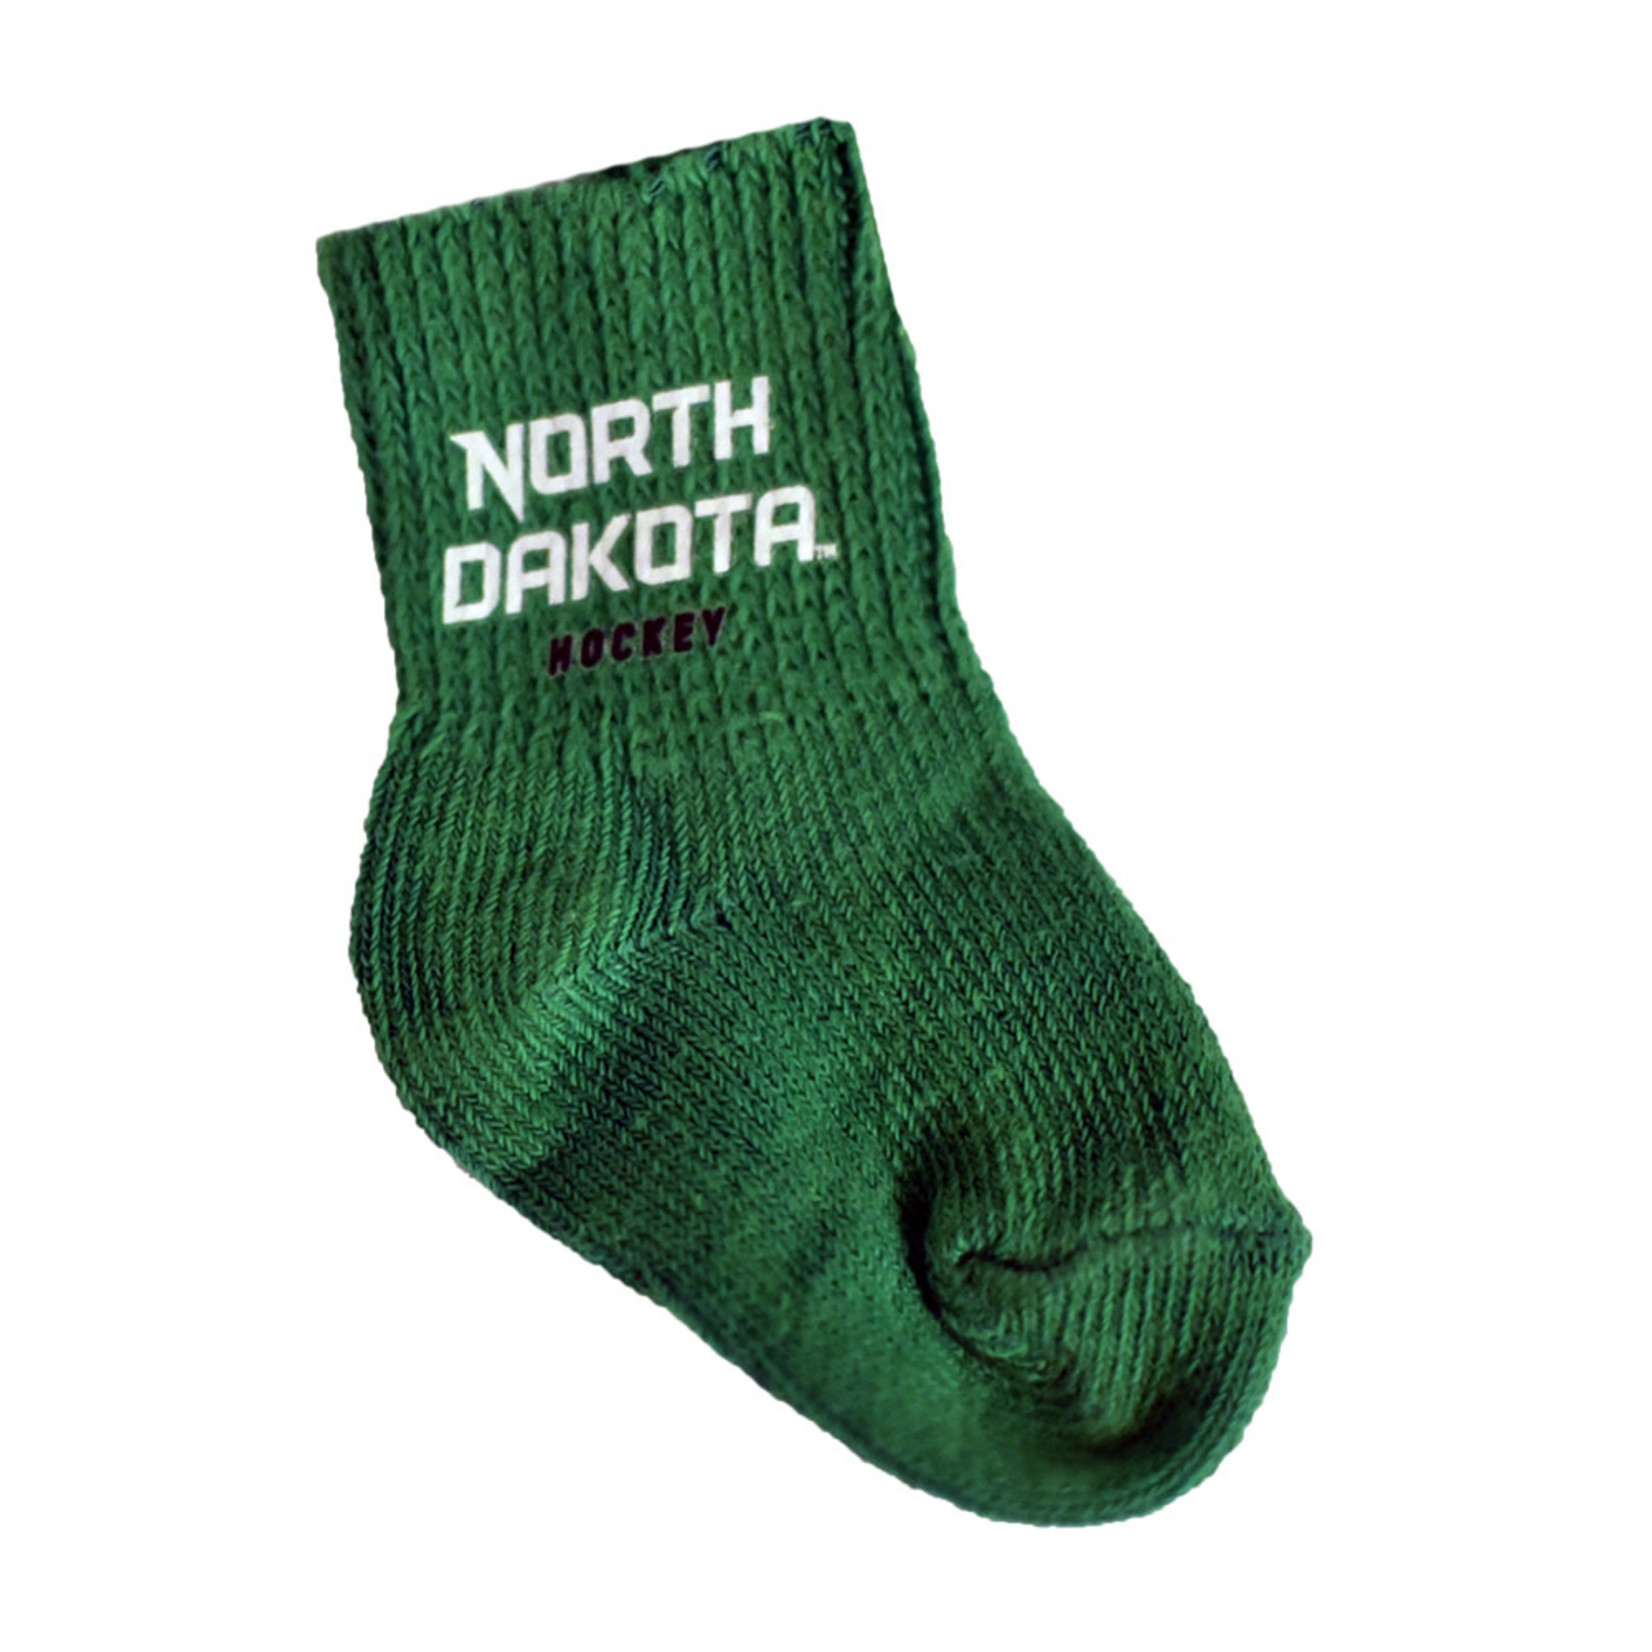 Creative Knitwear Newborn North Dakota Hockey Sock